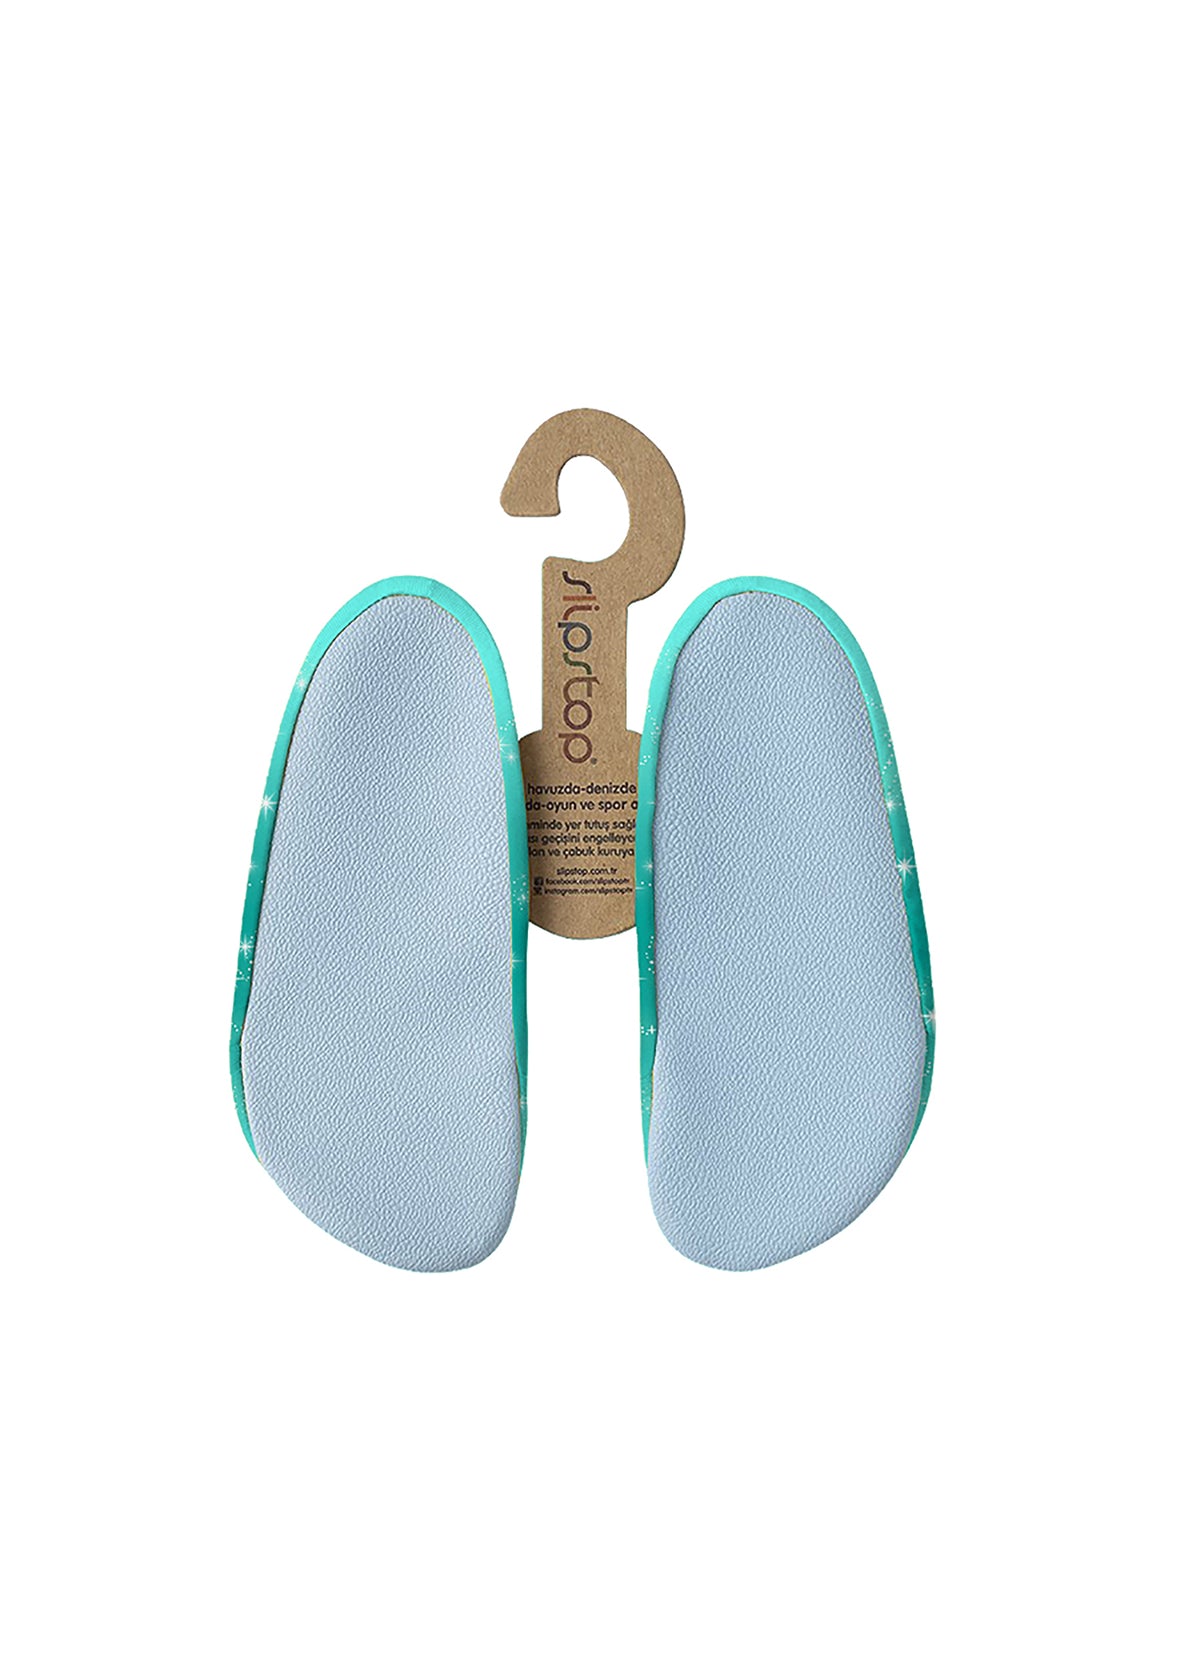 Children's slippers - Bellissima, unicorn, turquoise